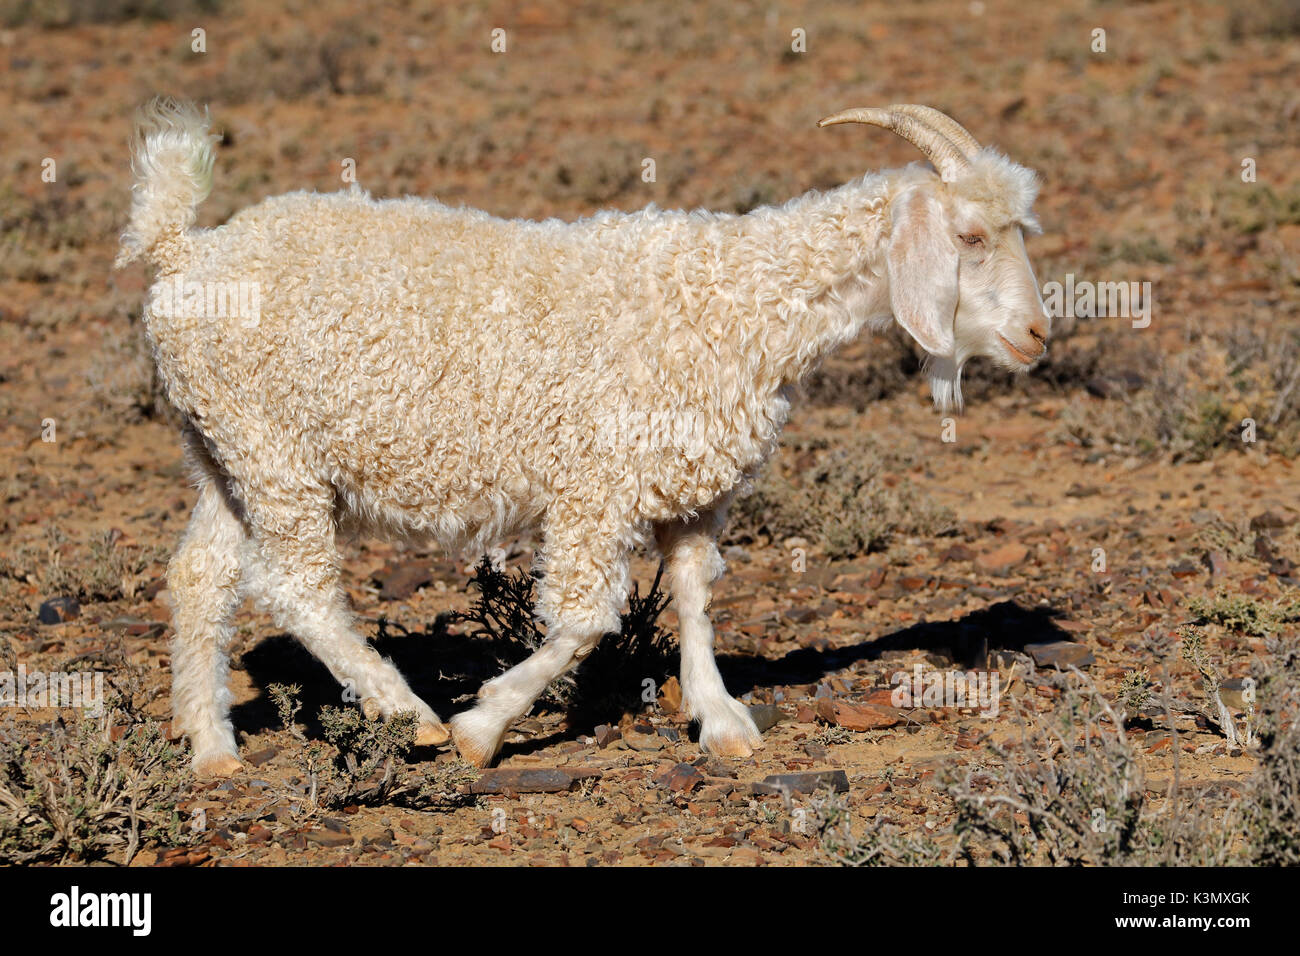 An Angora goat on a rural African free-range farm Stock Photo